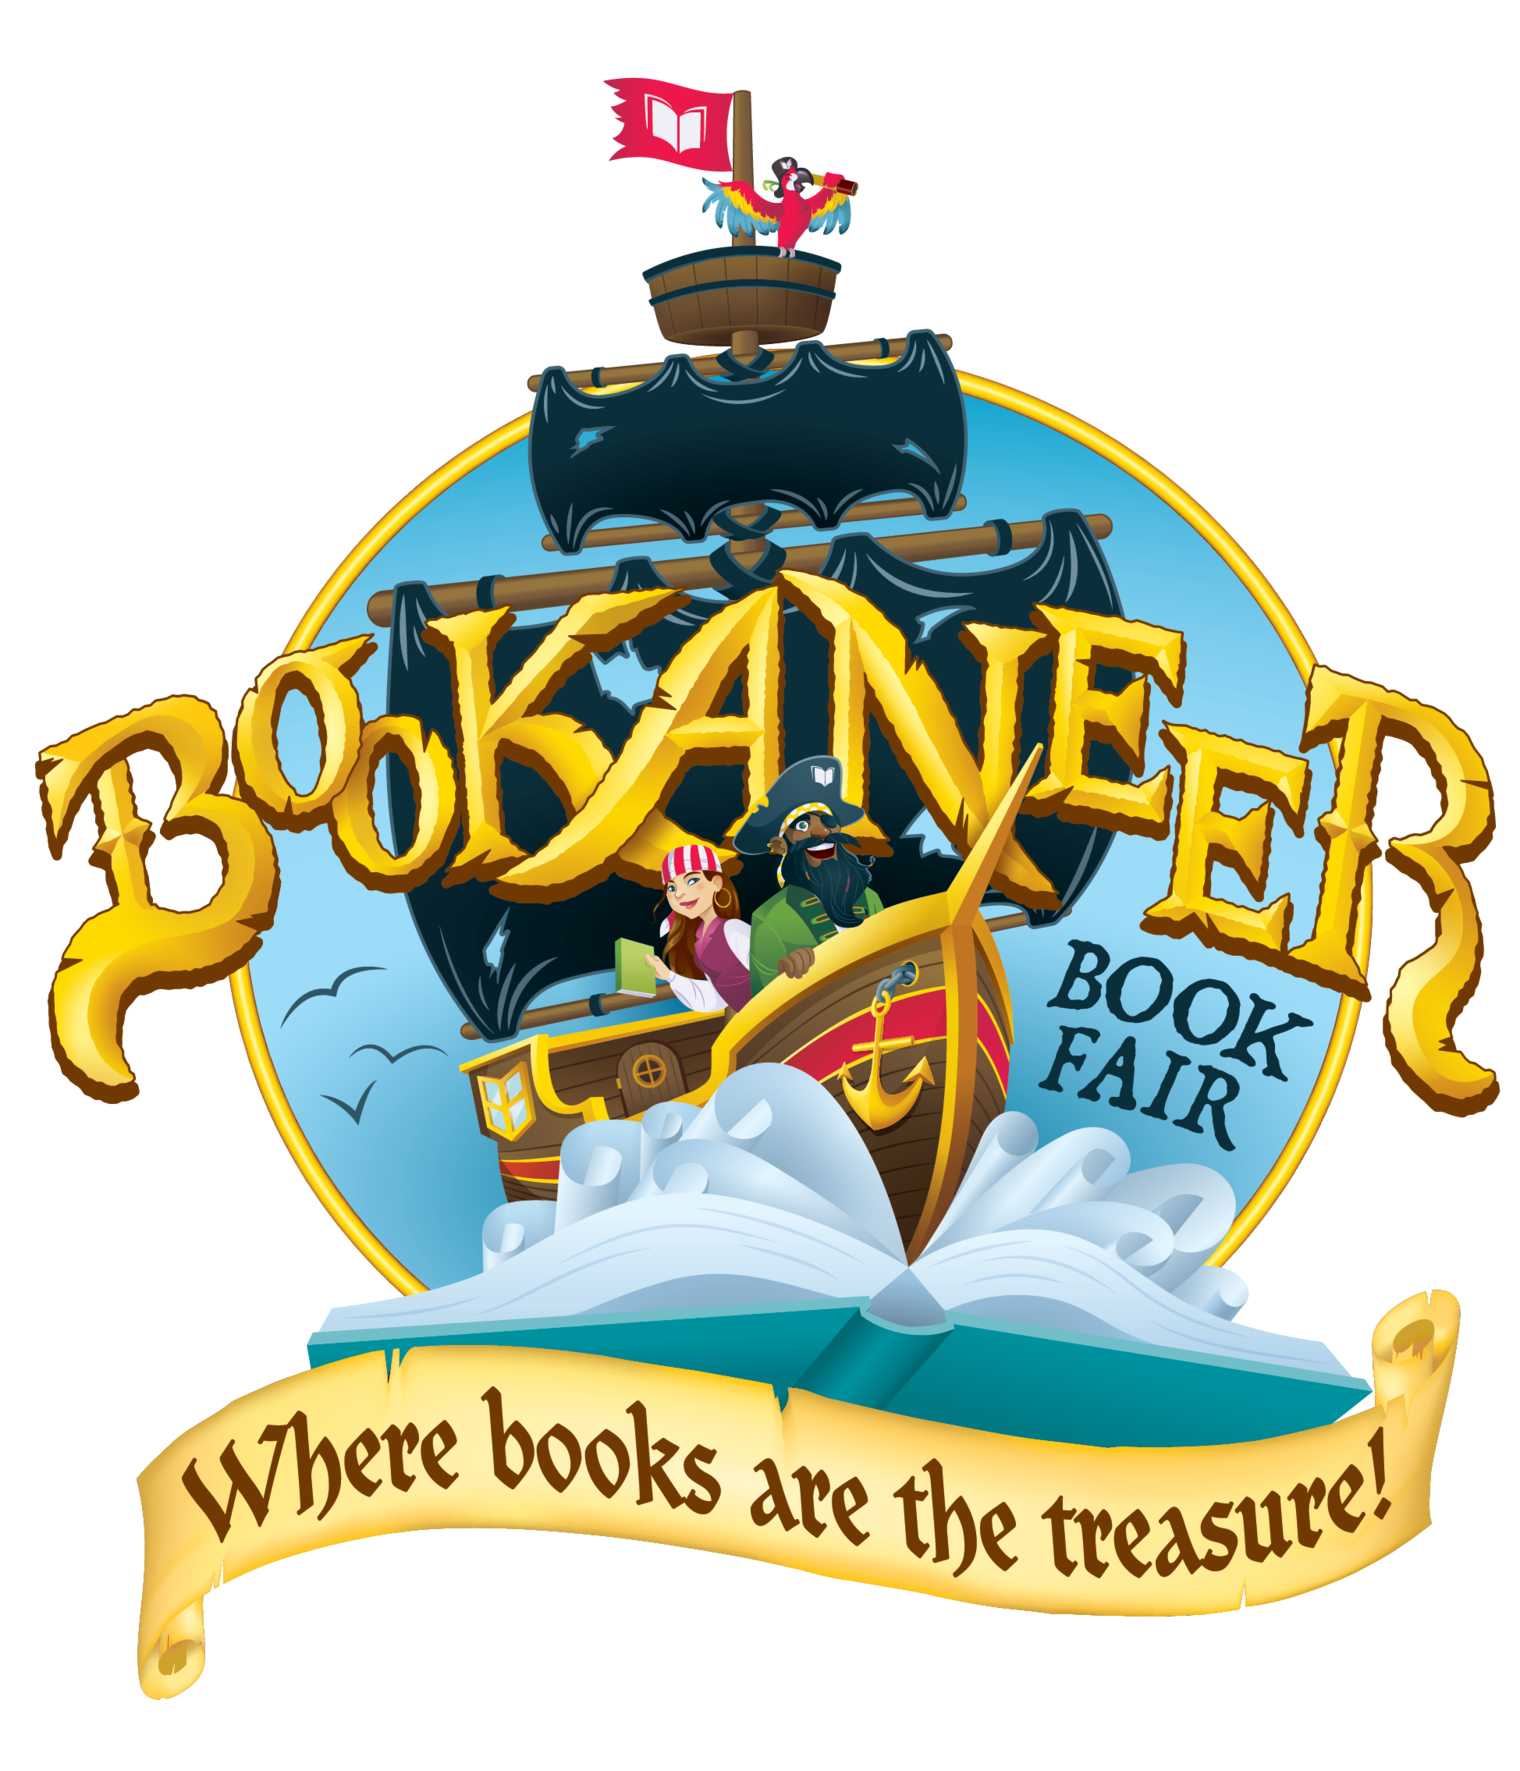 Bookaneer Book Fair